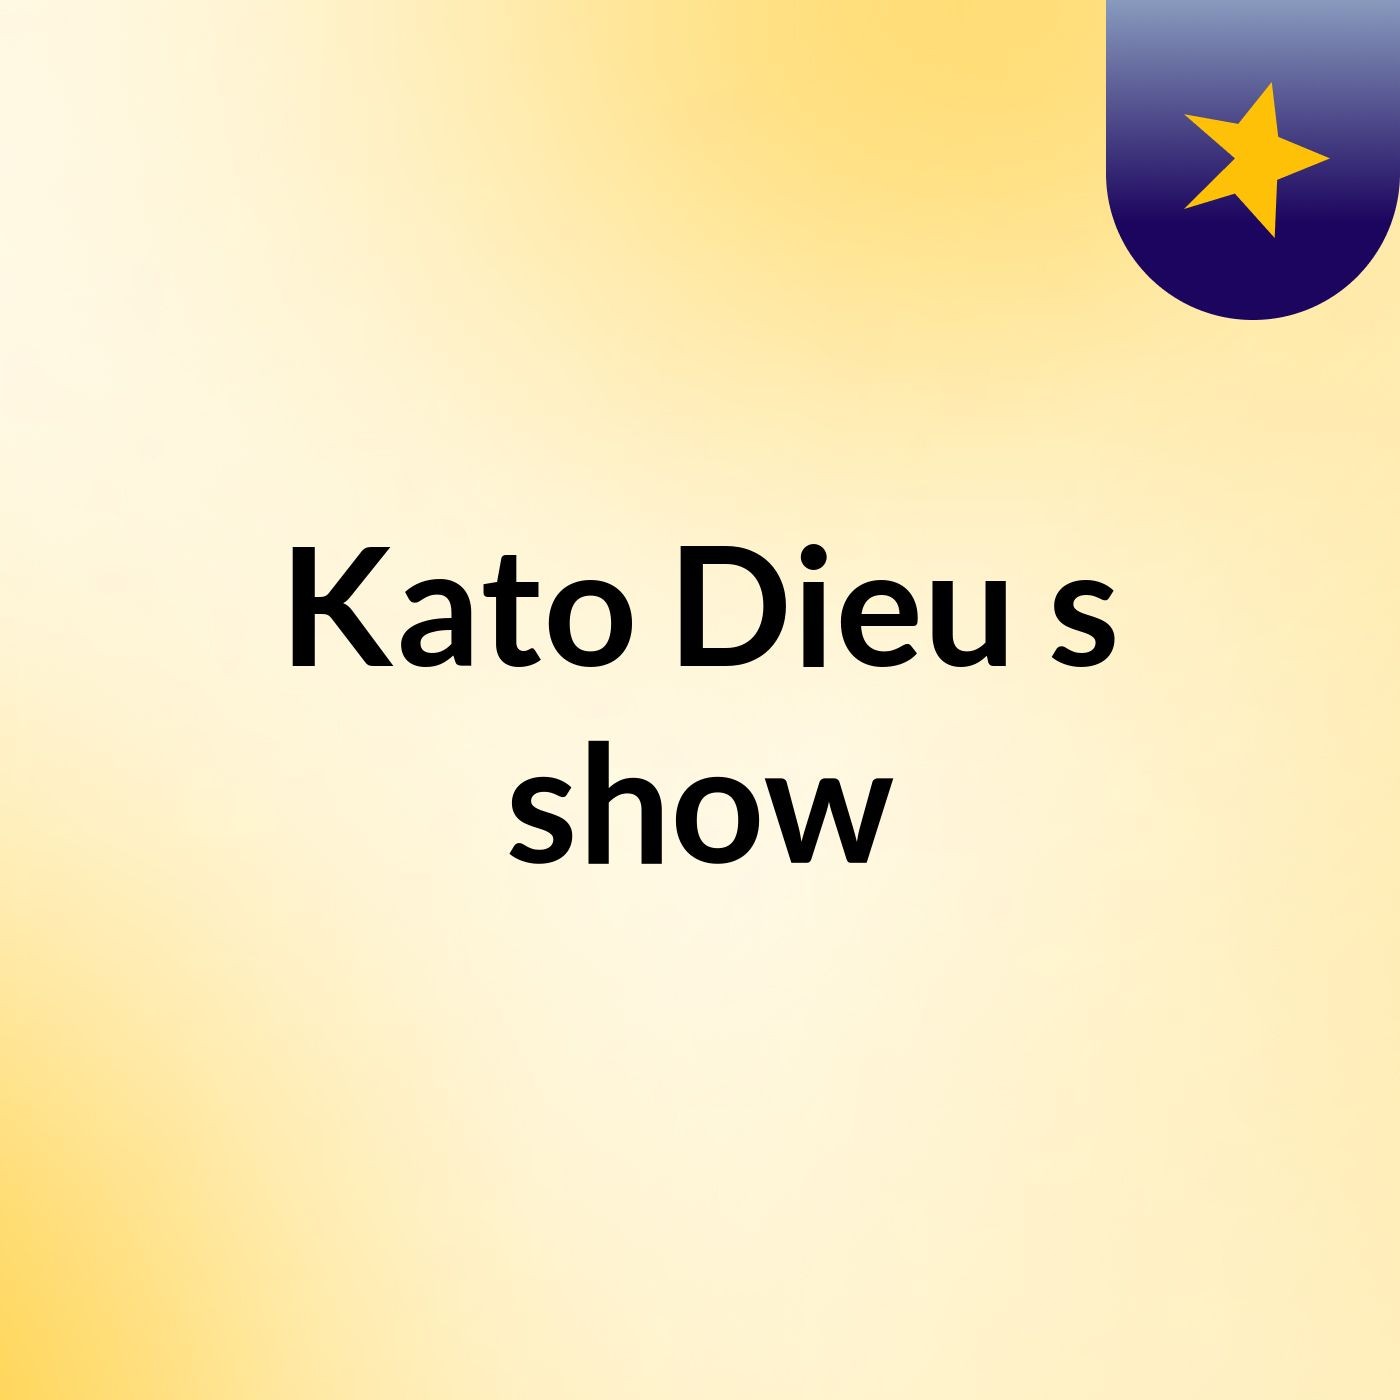 Kato Dieu's show